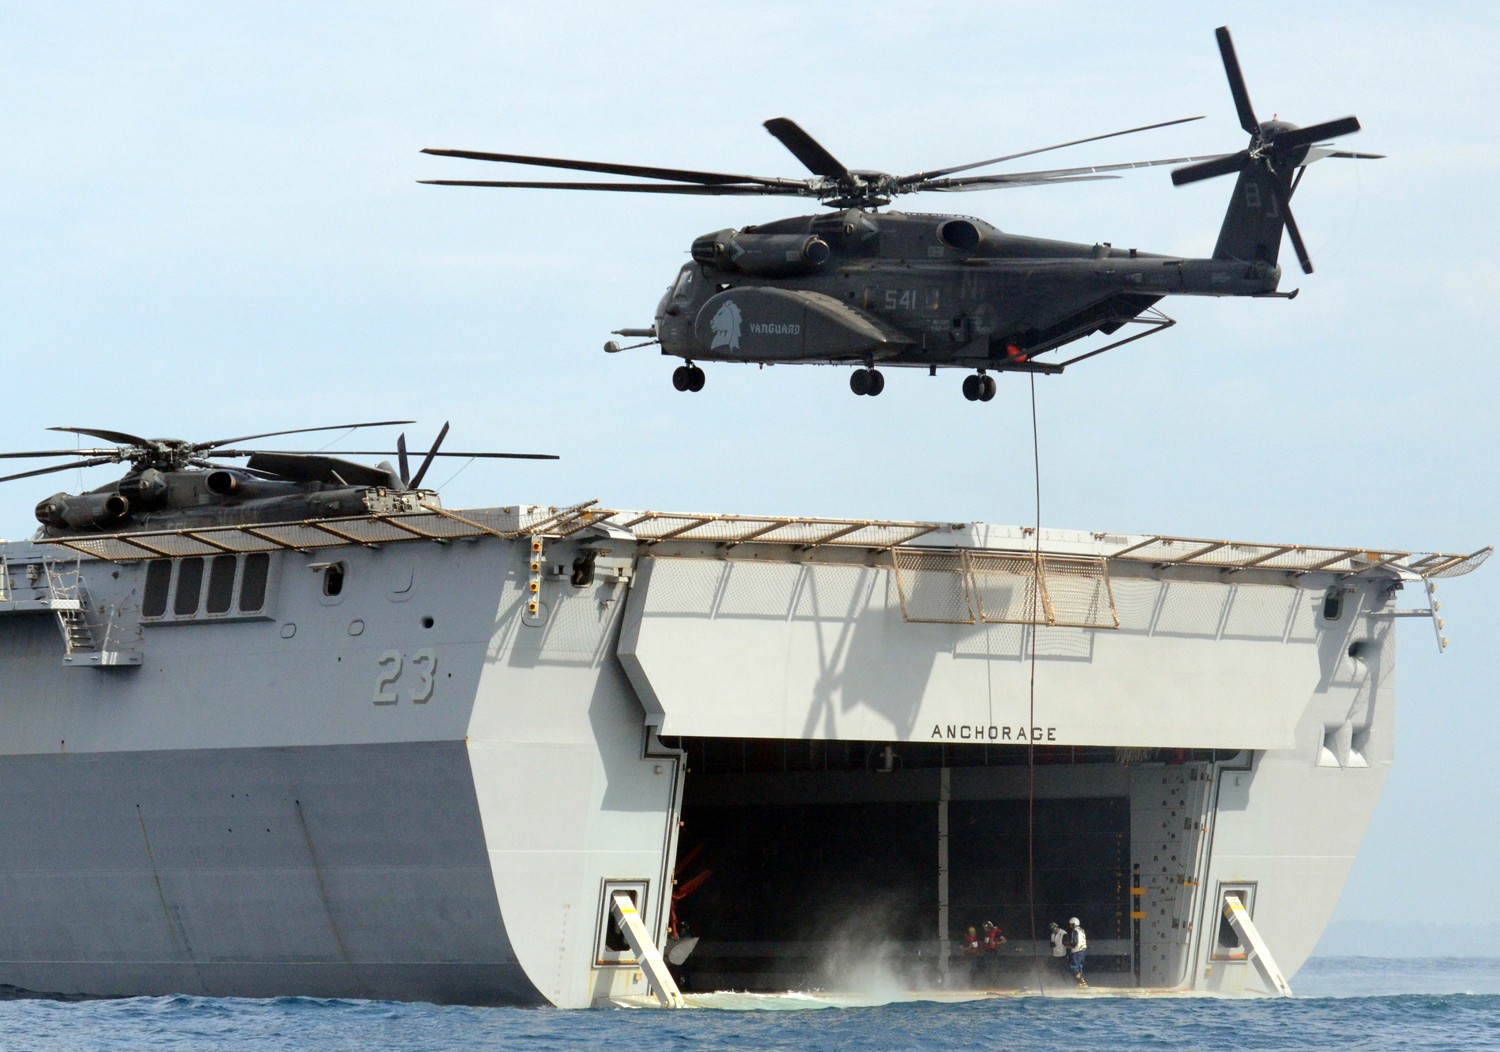 hm-14 vanguard helicopter mine countermeasures squadron navy mh-53e sea dragon 142 uss anchorage lpd-23